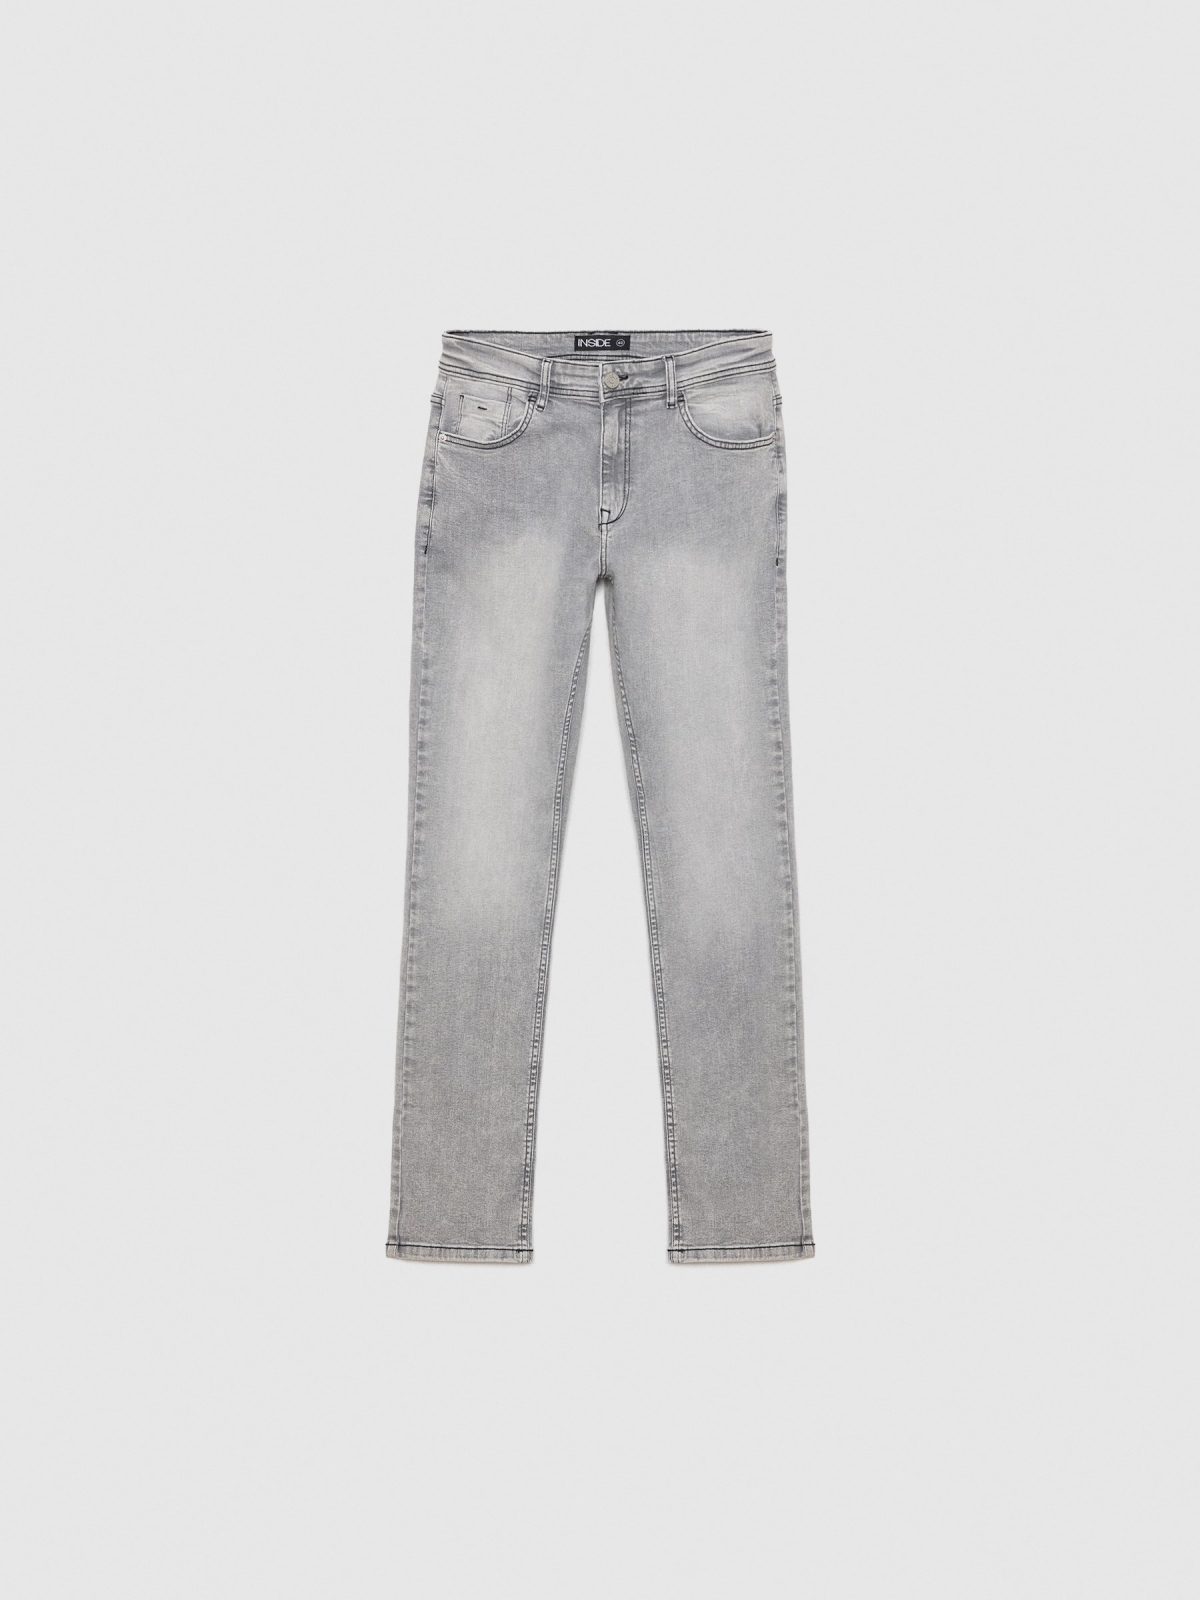  Jeans regular denim gris gris